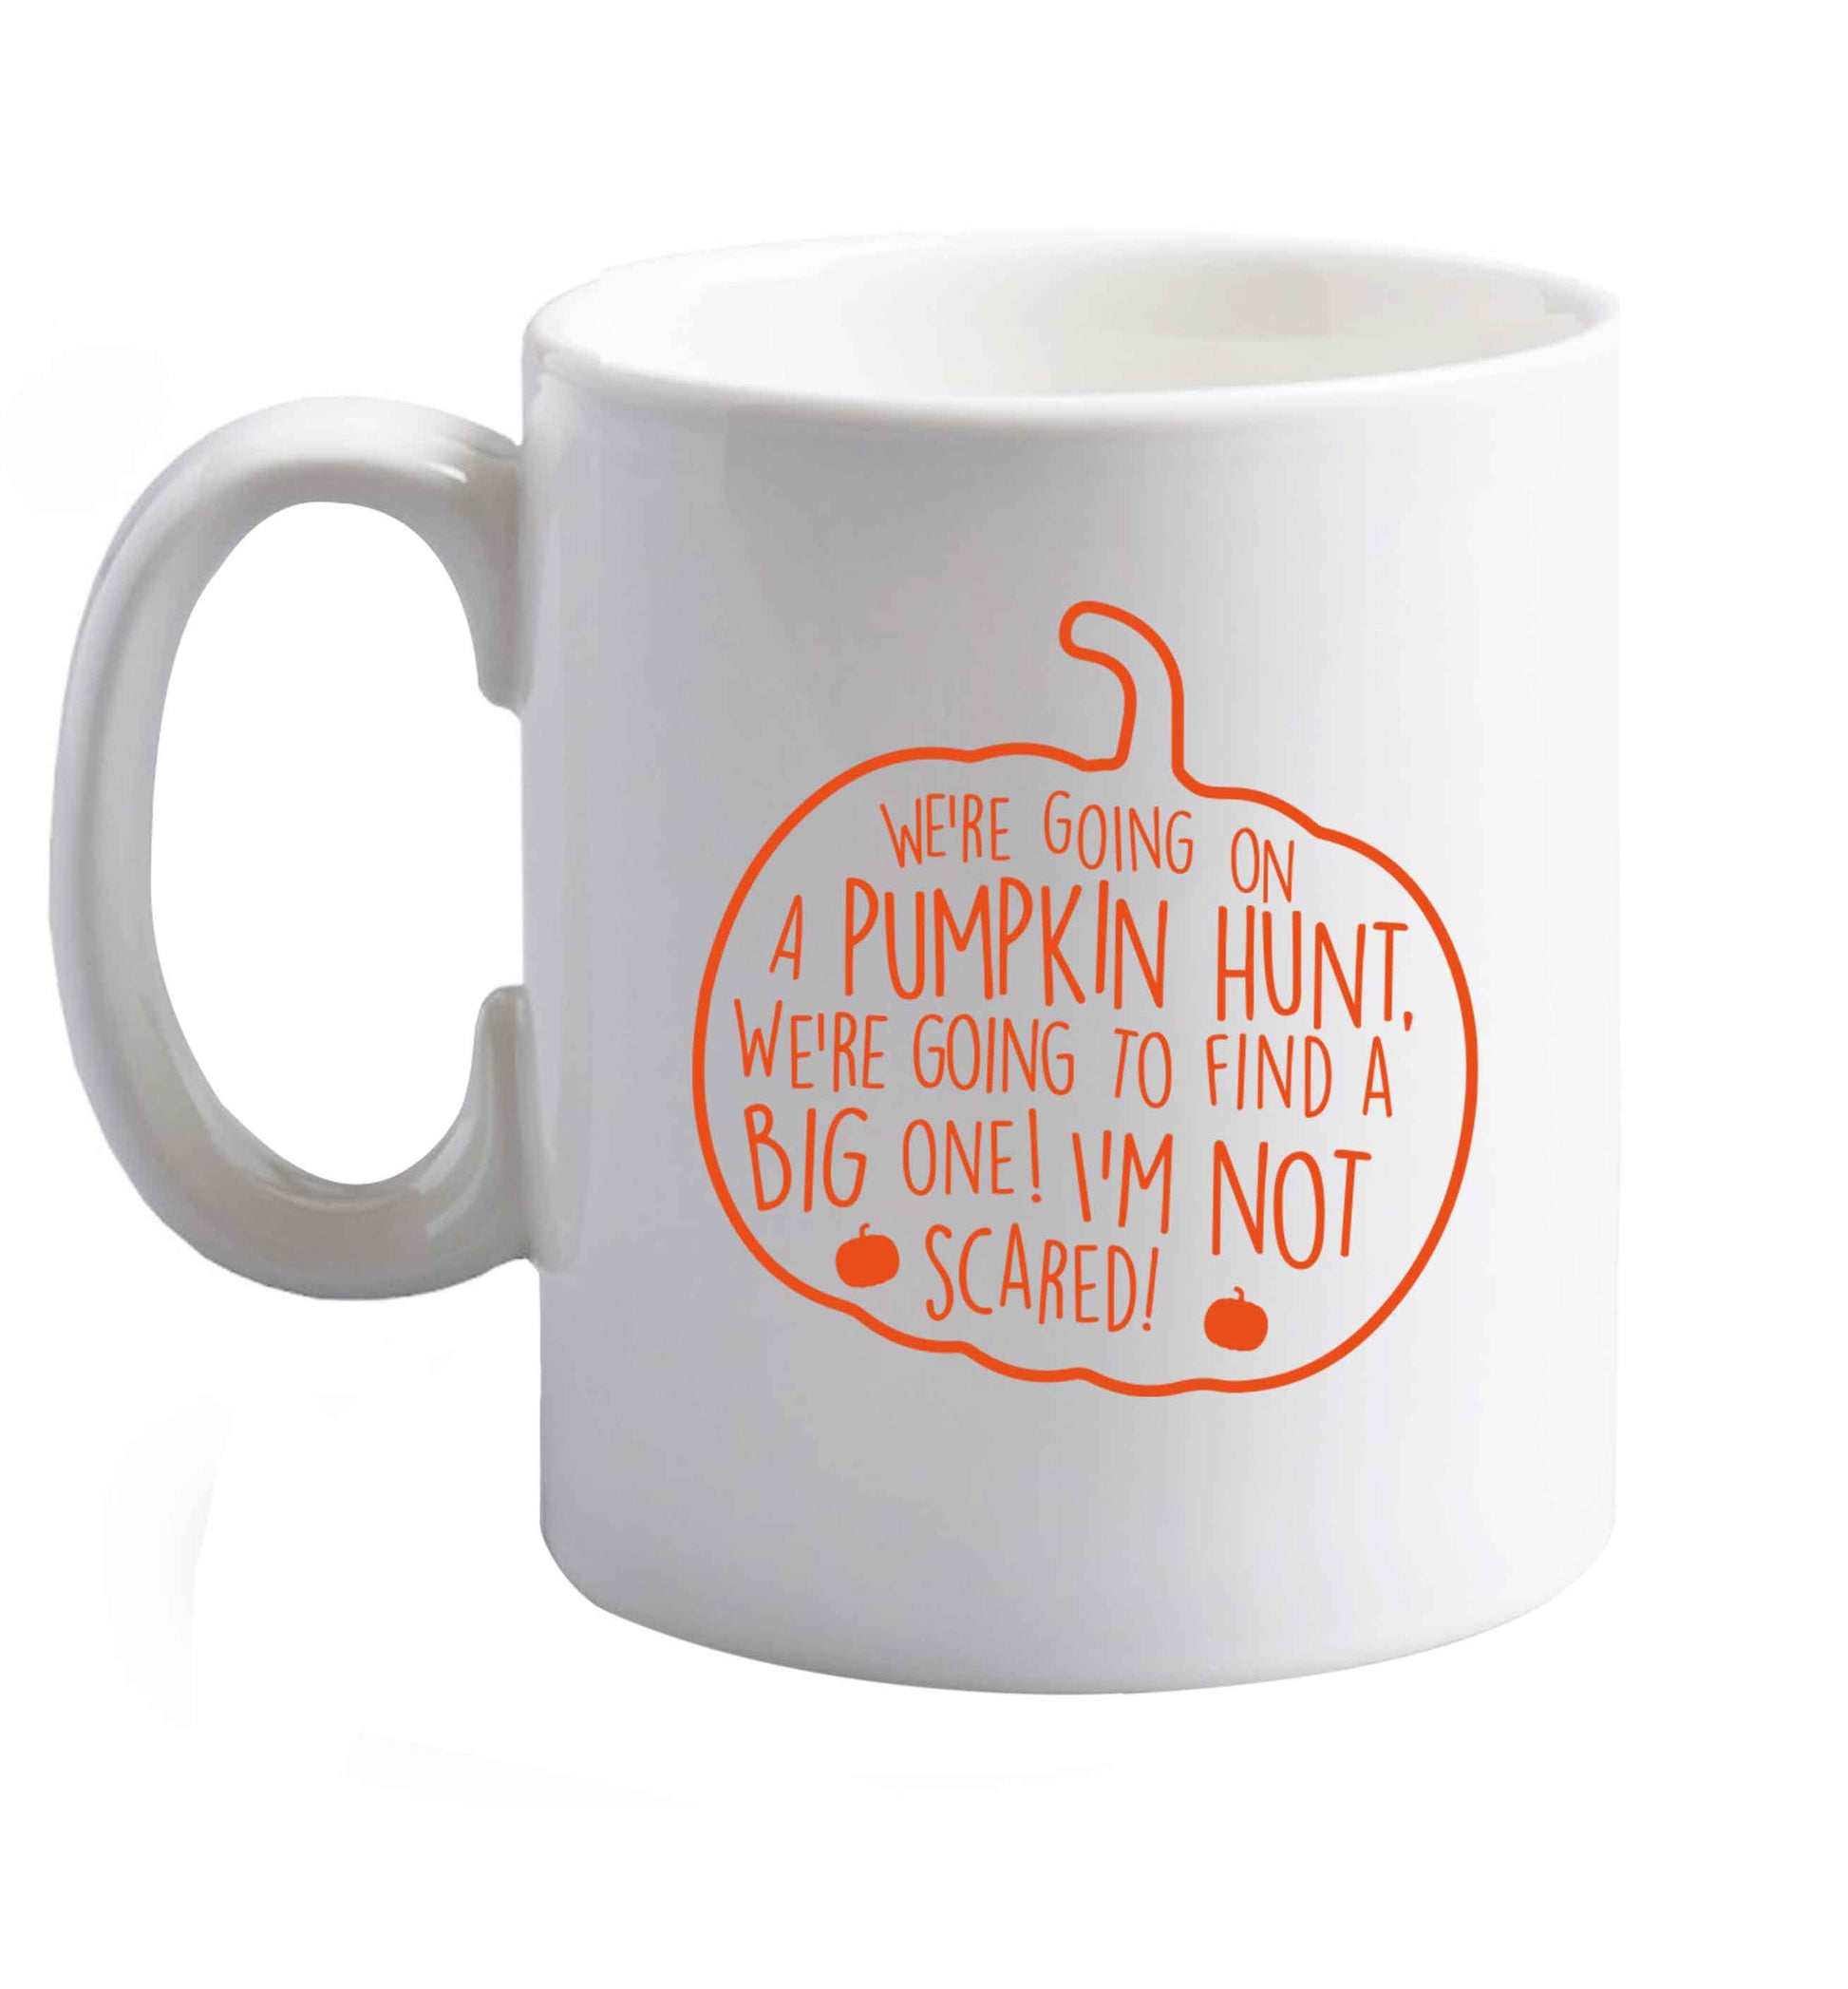 10 oz We're going on a pumpkin hunt ceramic mug right handed